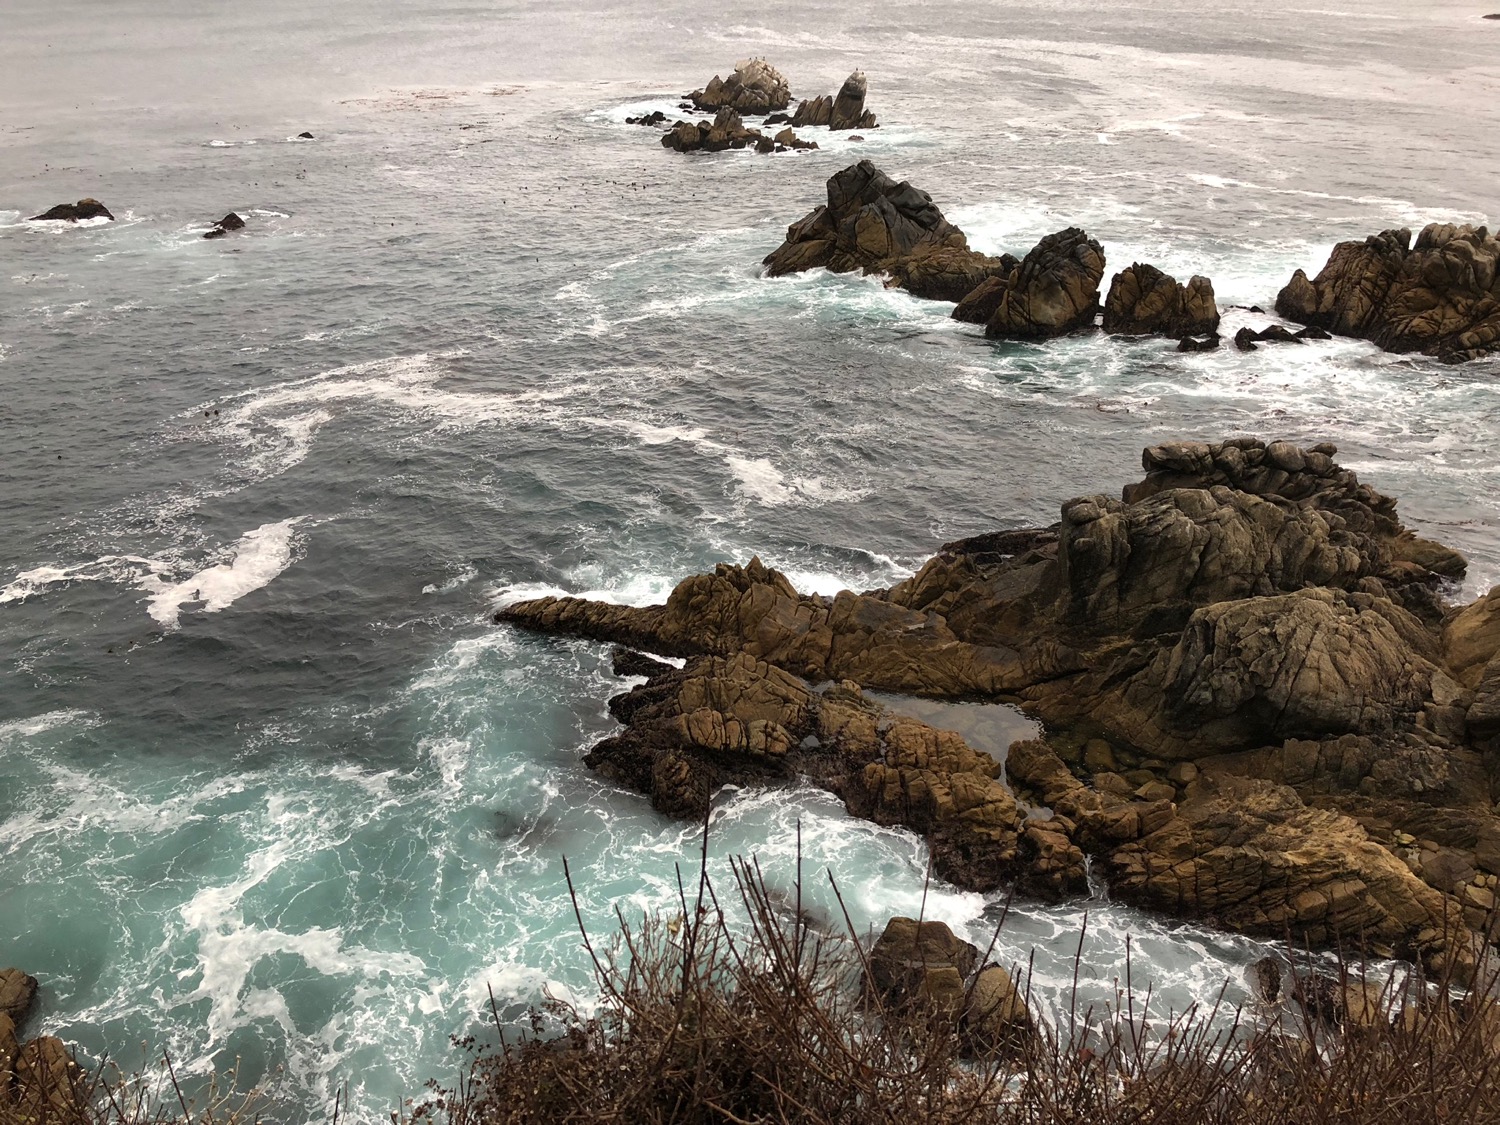 a rocky coastline with waves crashing on the rocks